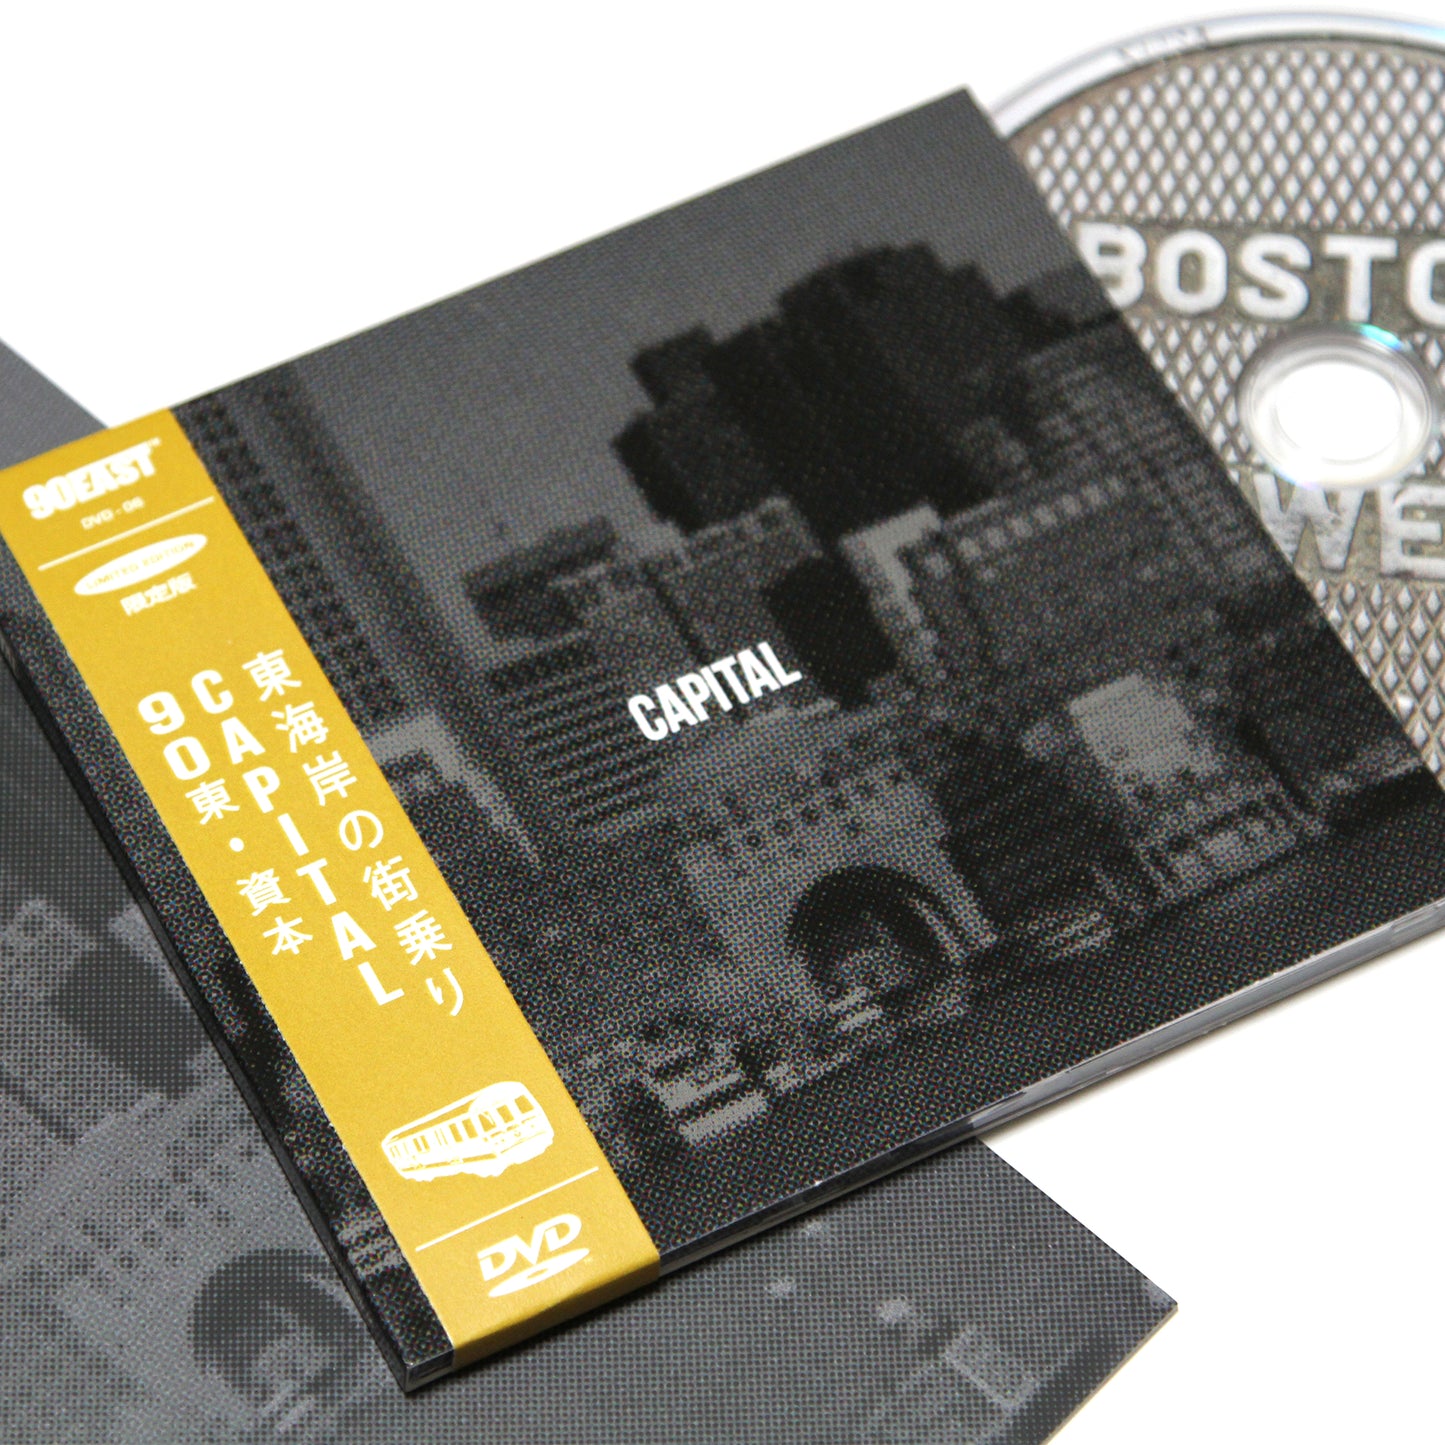 90EAST - Capital DVD & Booklet Set